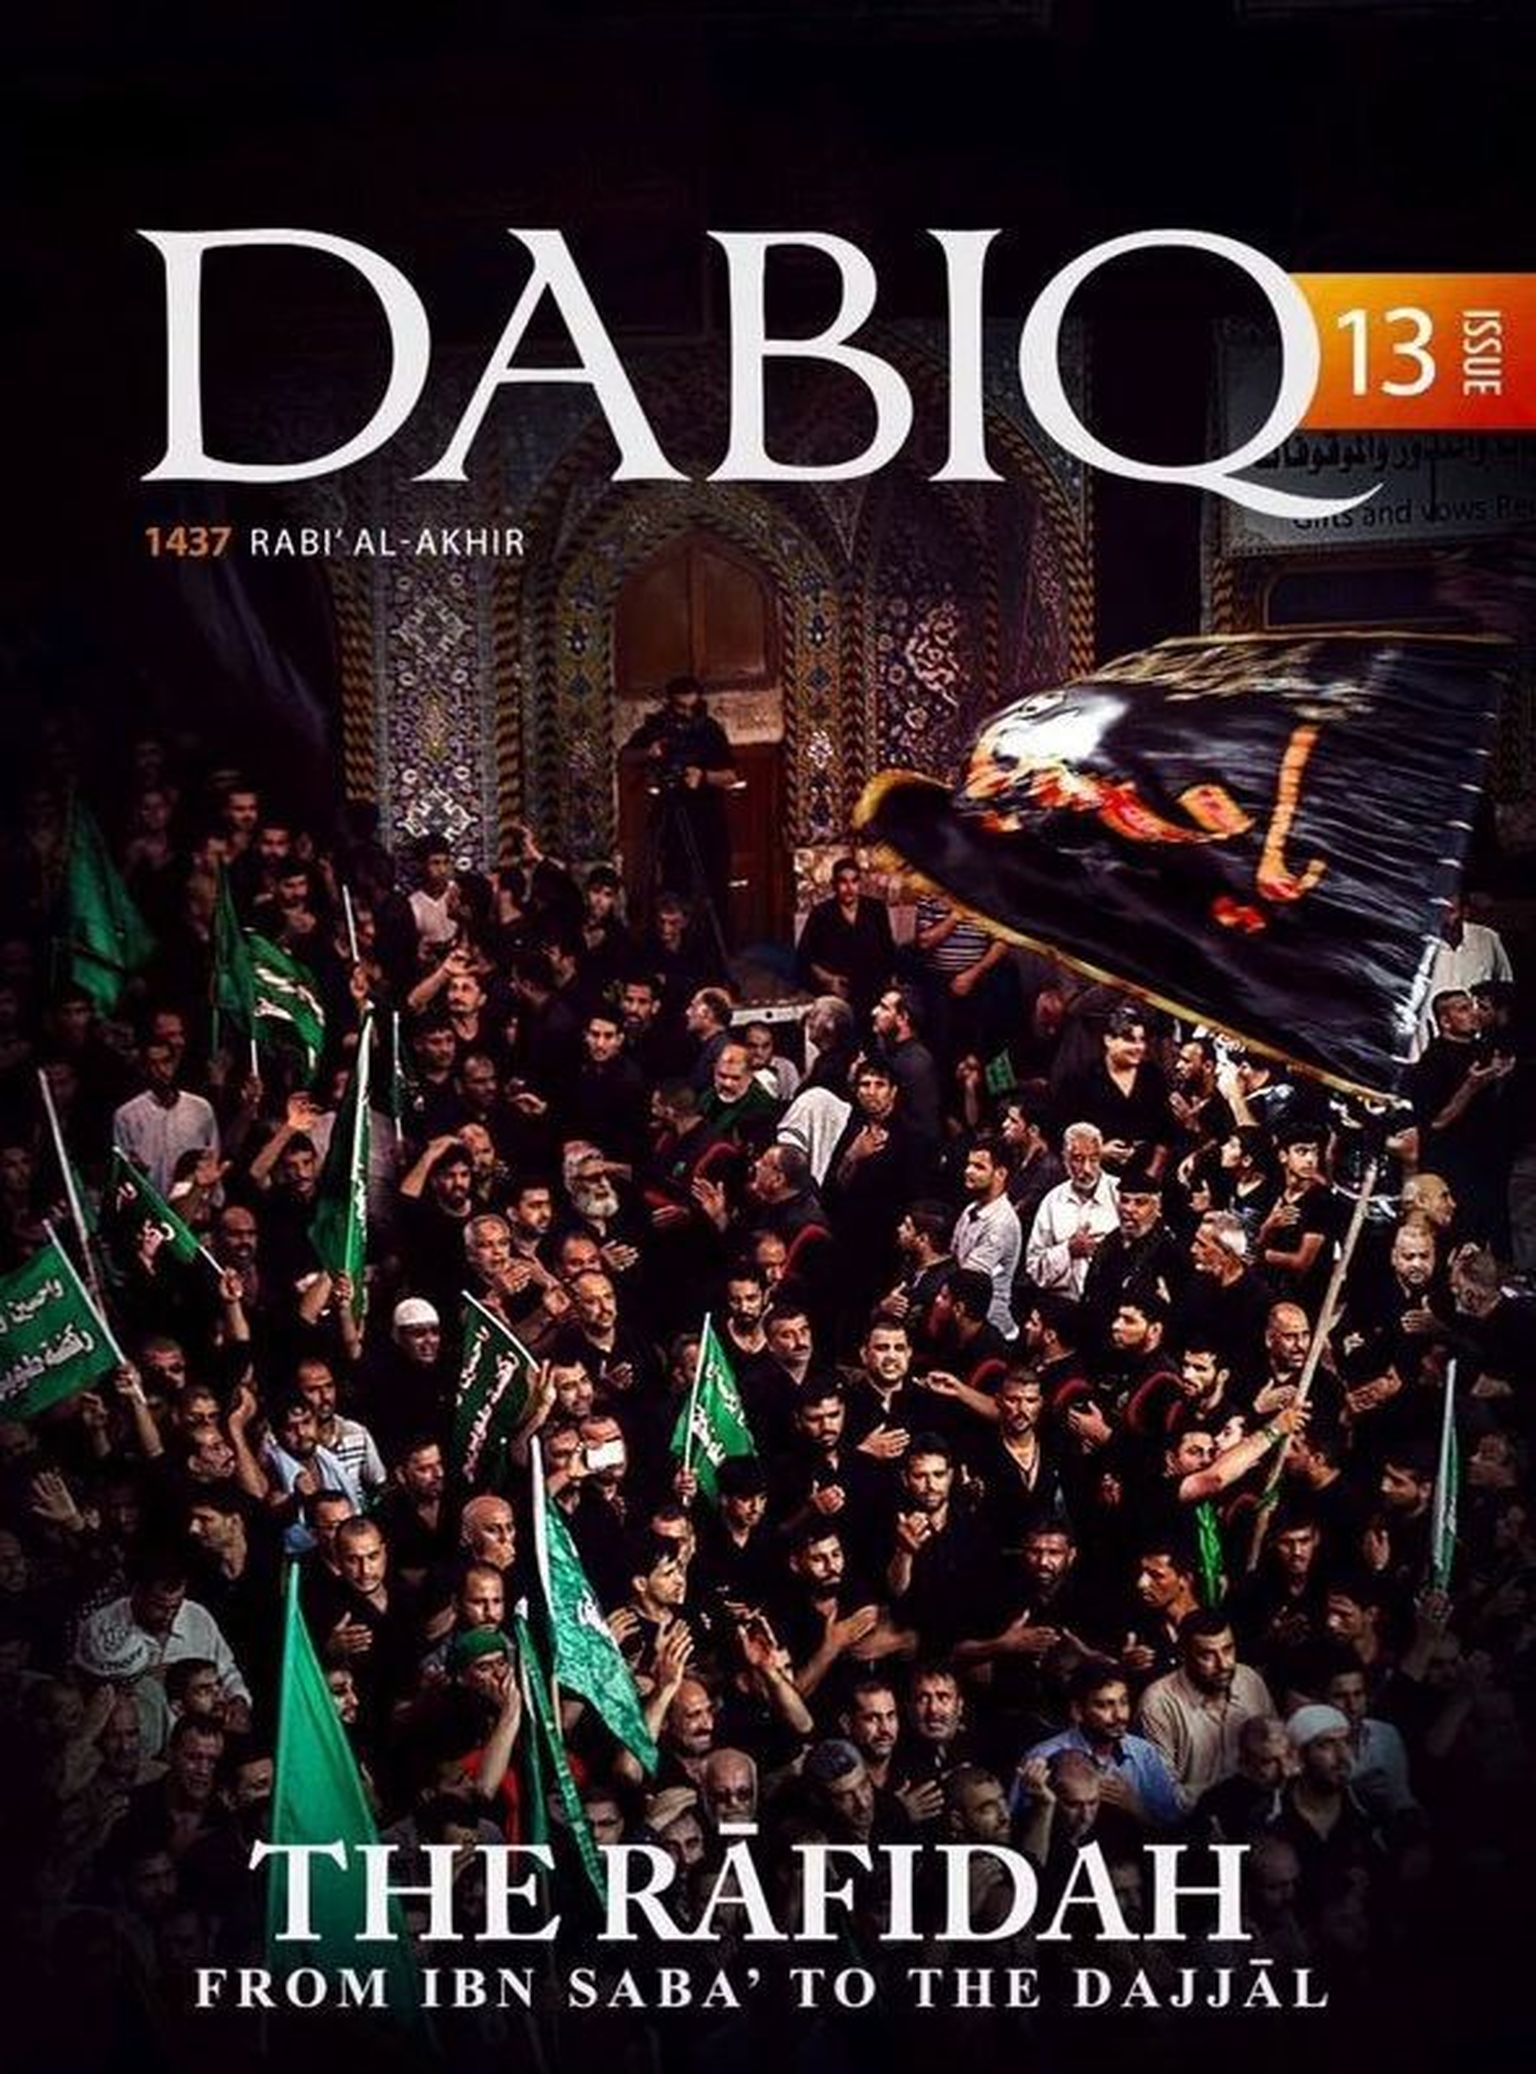 Islamiriigi ajakirja Dabiq 13. number